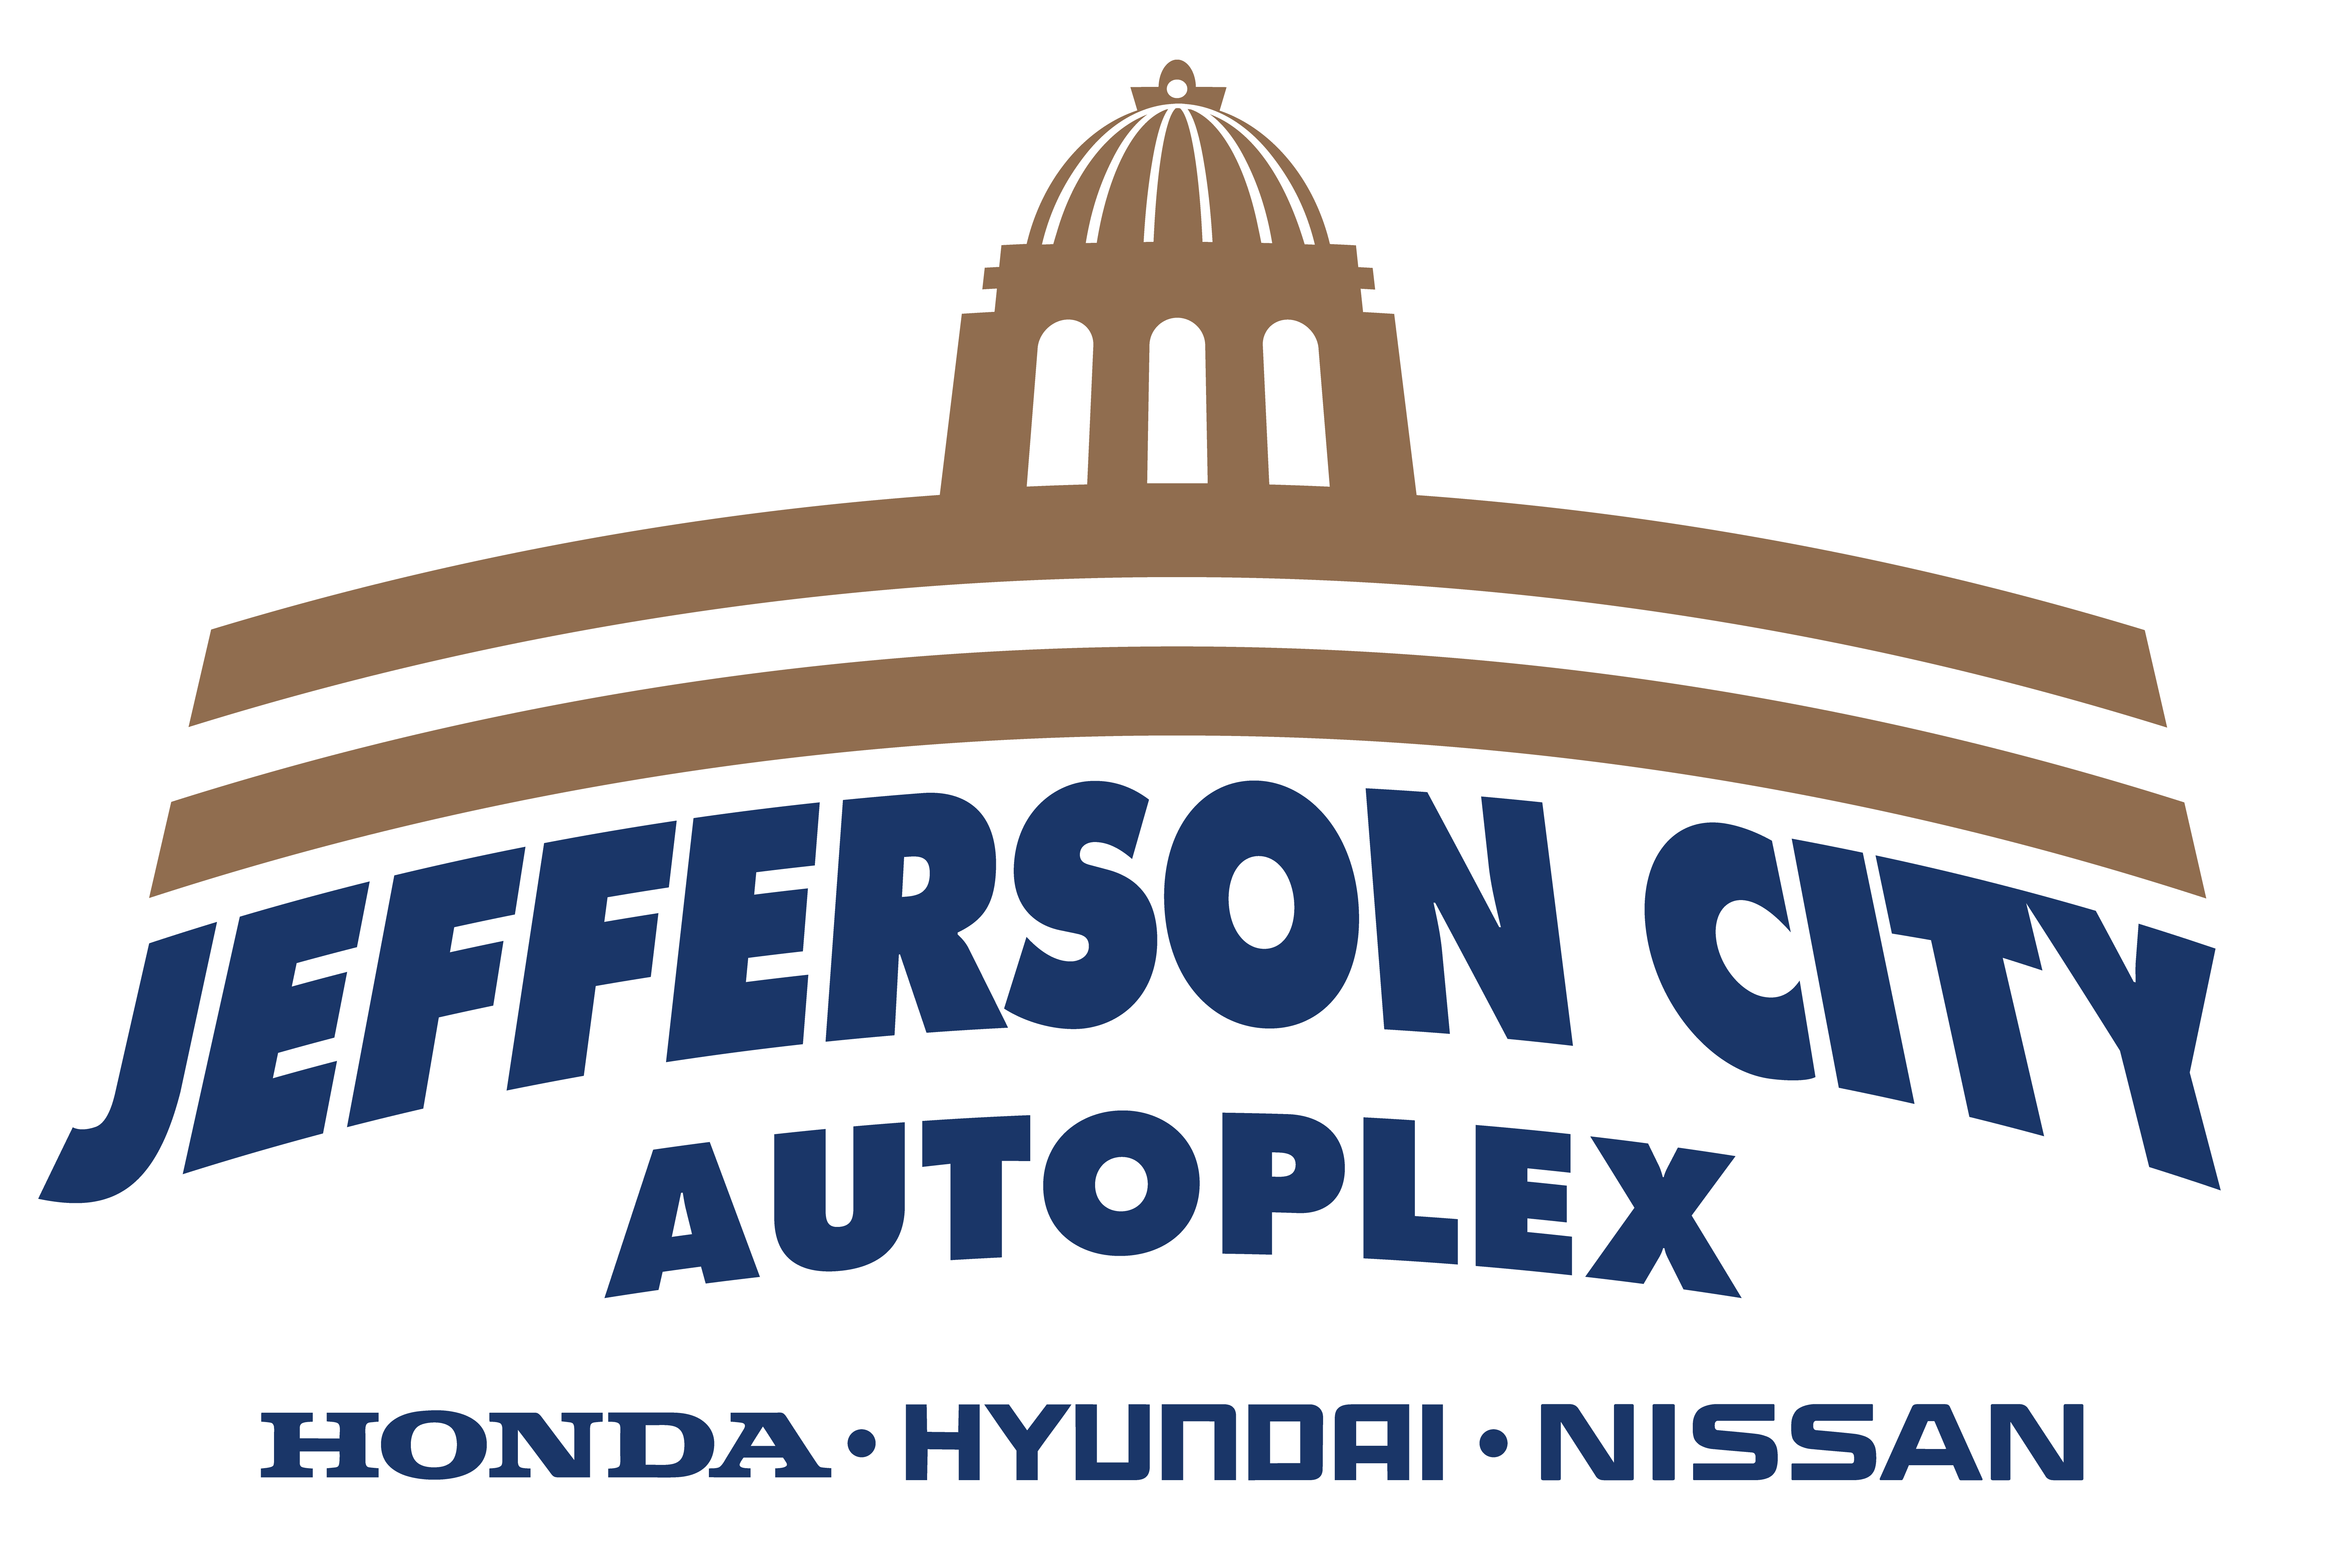 Jefferson City AutoPlex